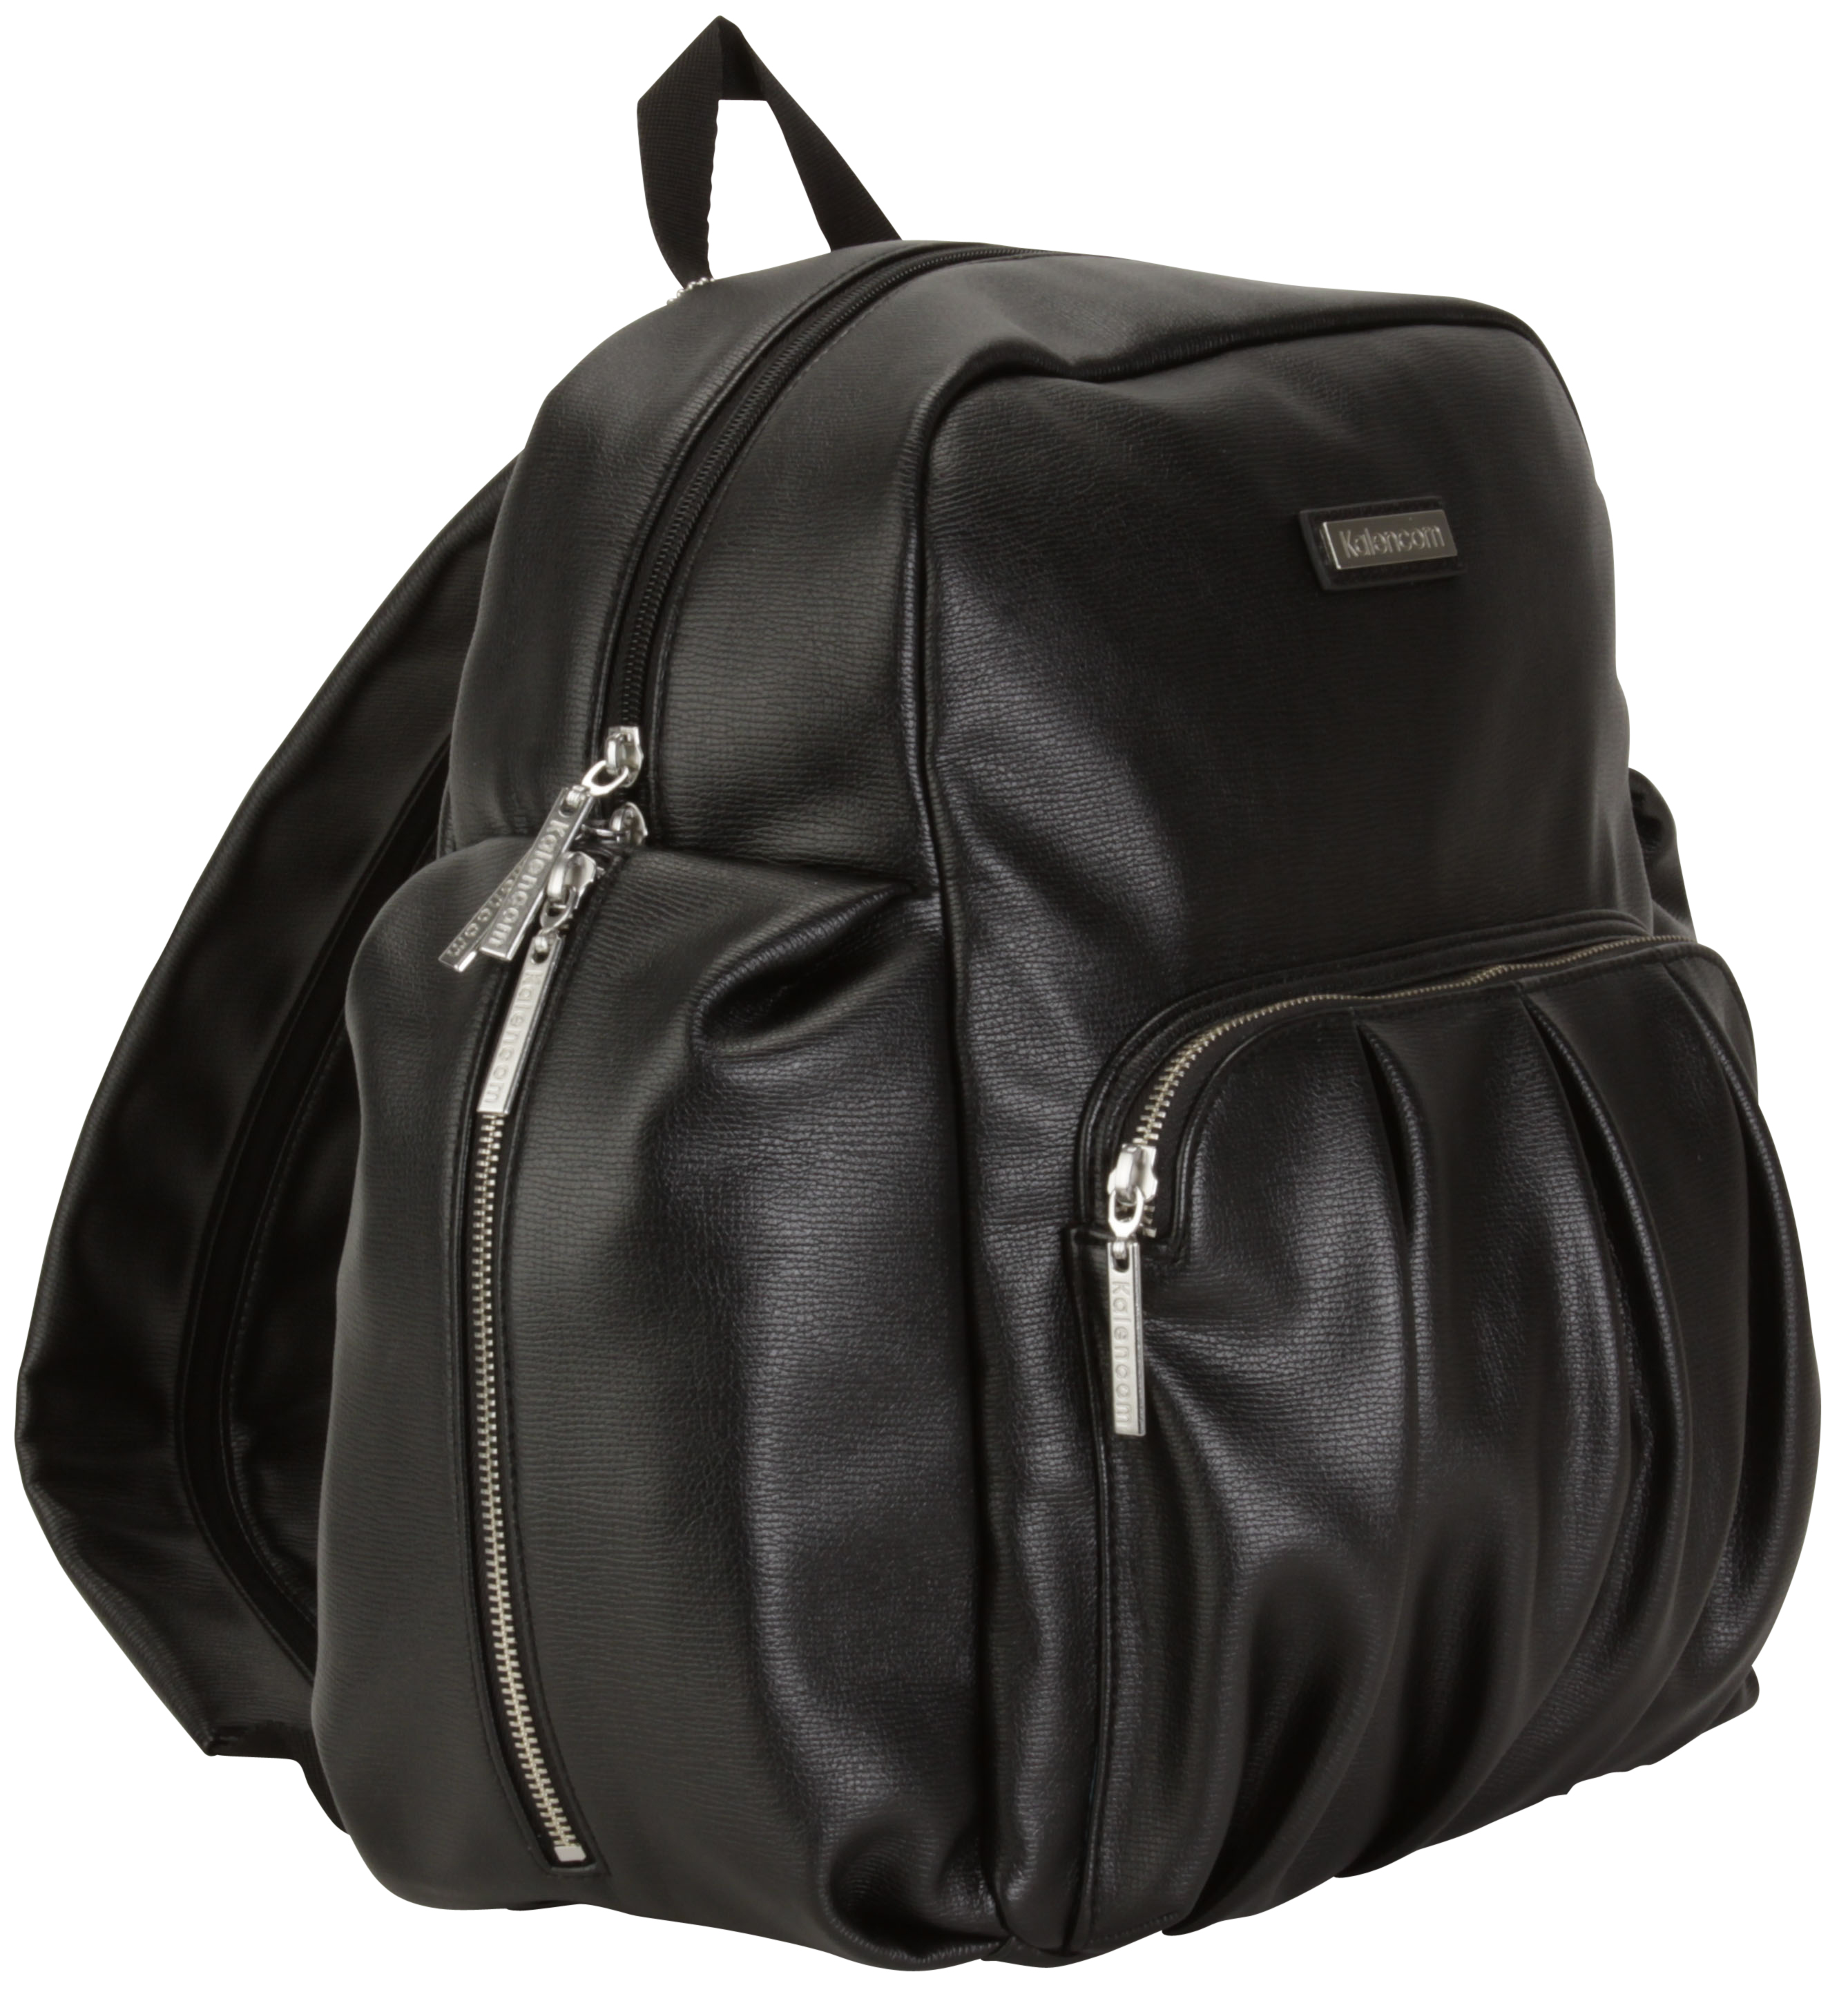 Kalencom Chicago Backpack / Urban Sling Diaper Bag in Black Vegan - image 3 of 4